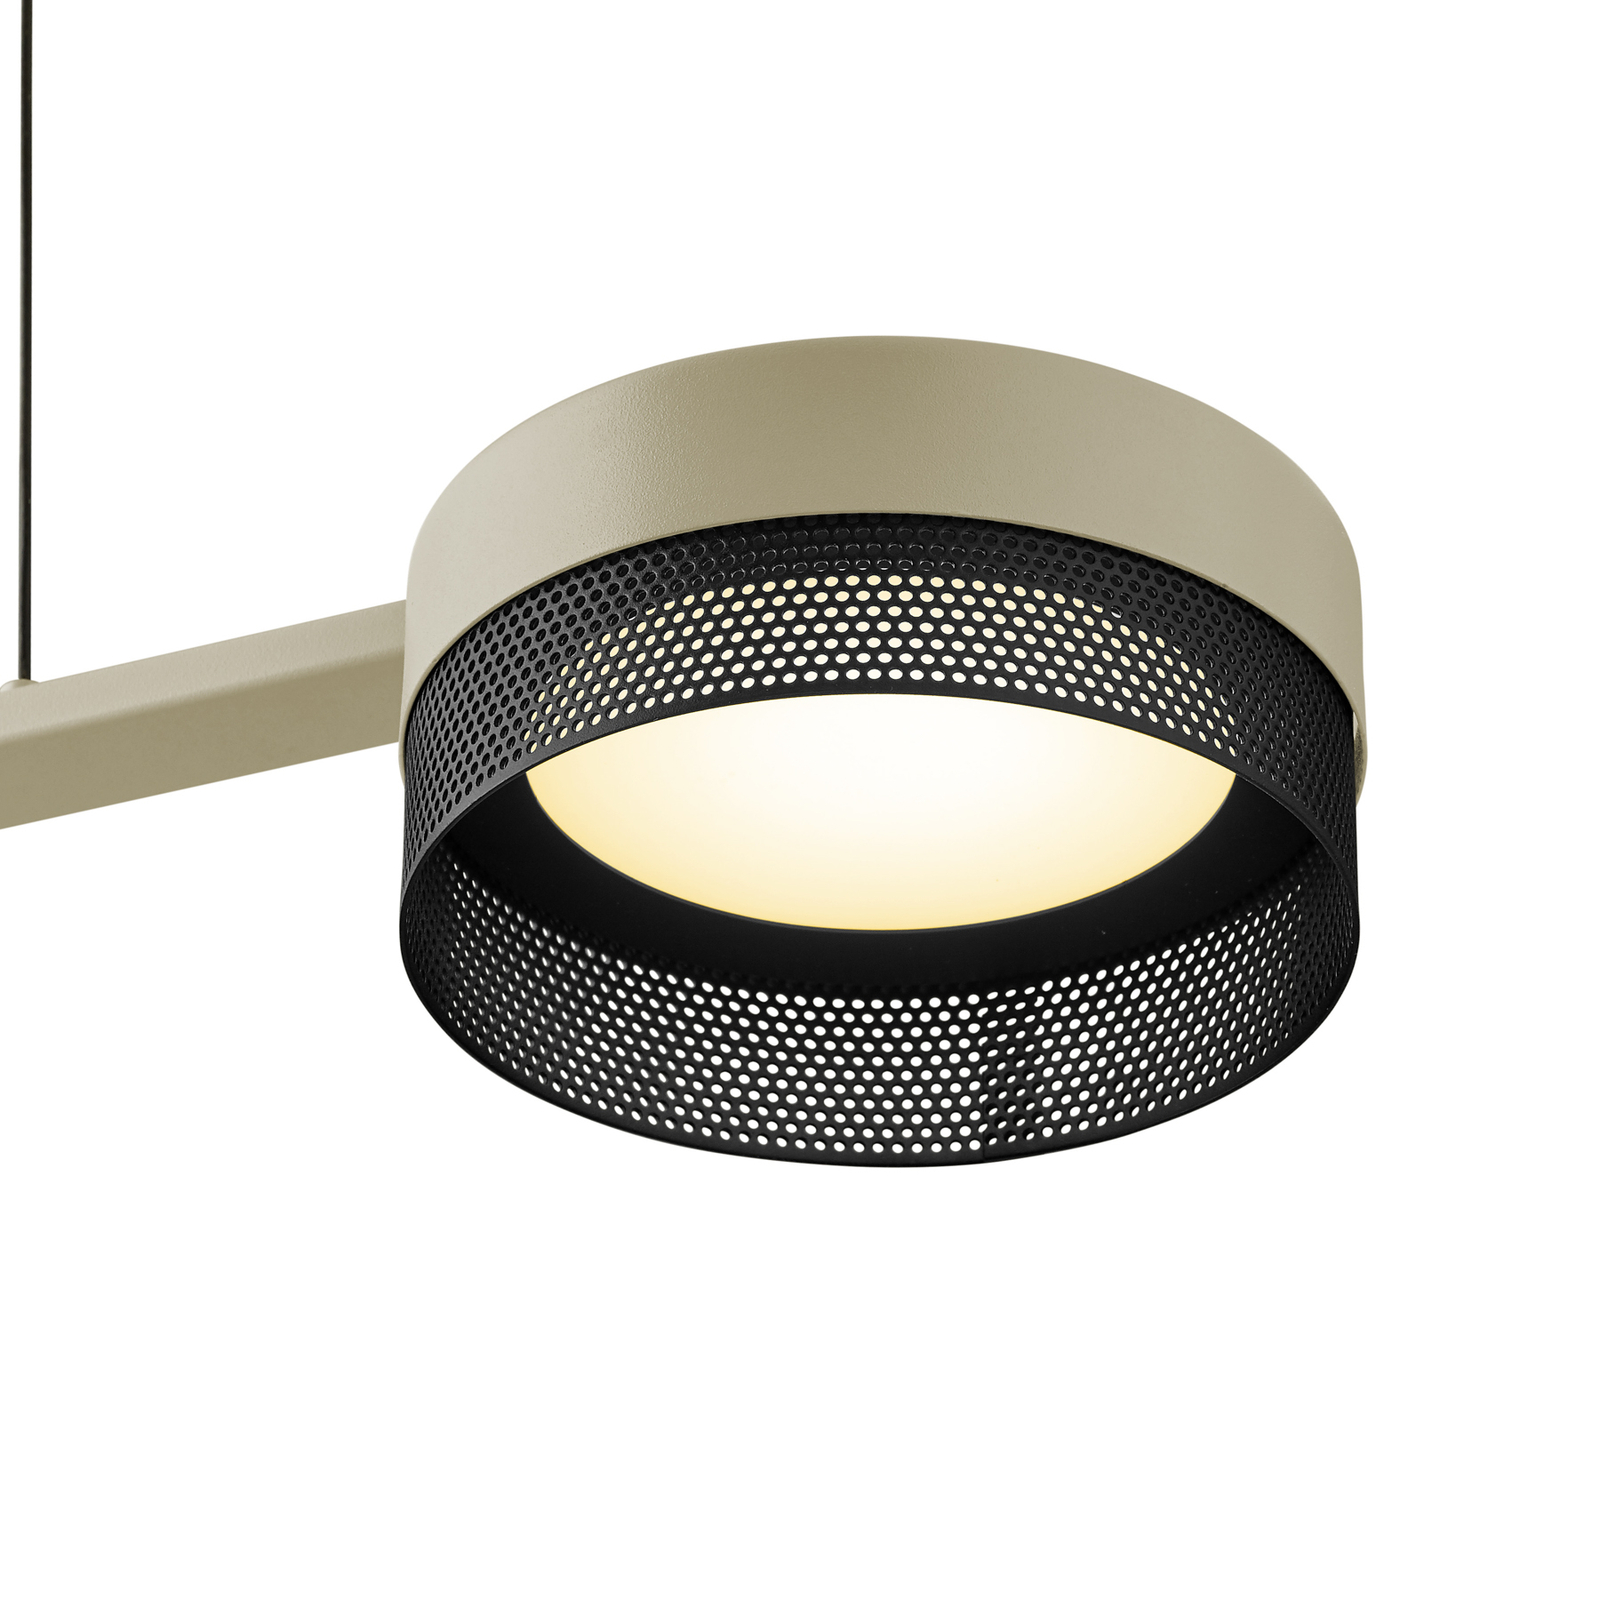 LED-hänglampa Mesh 3 lampor dimmer, sand/svart